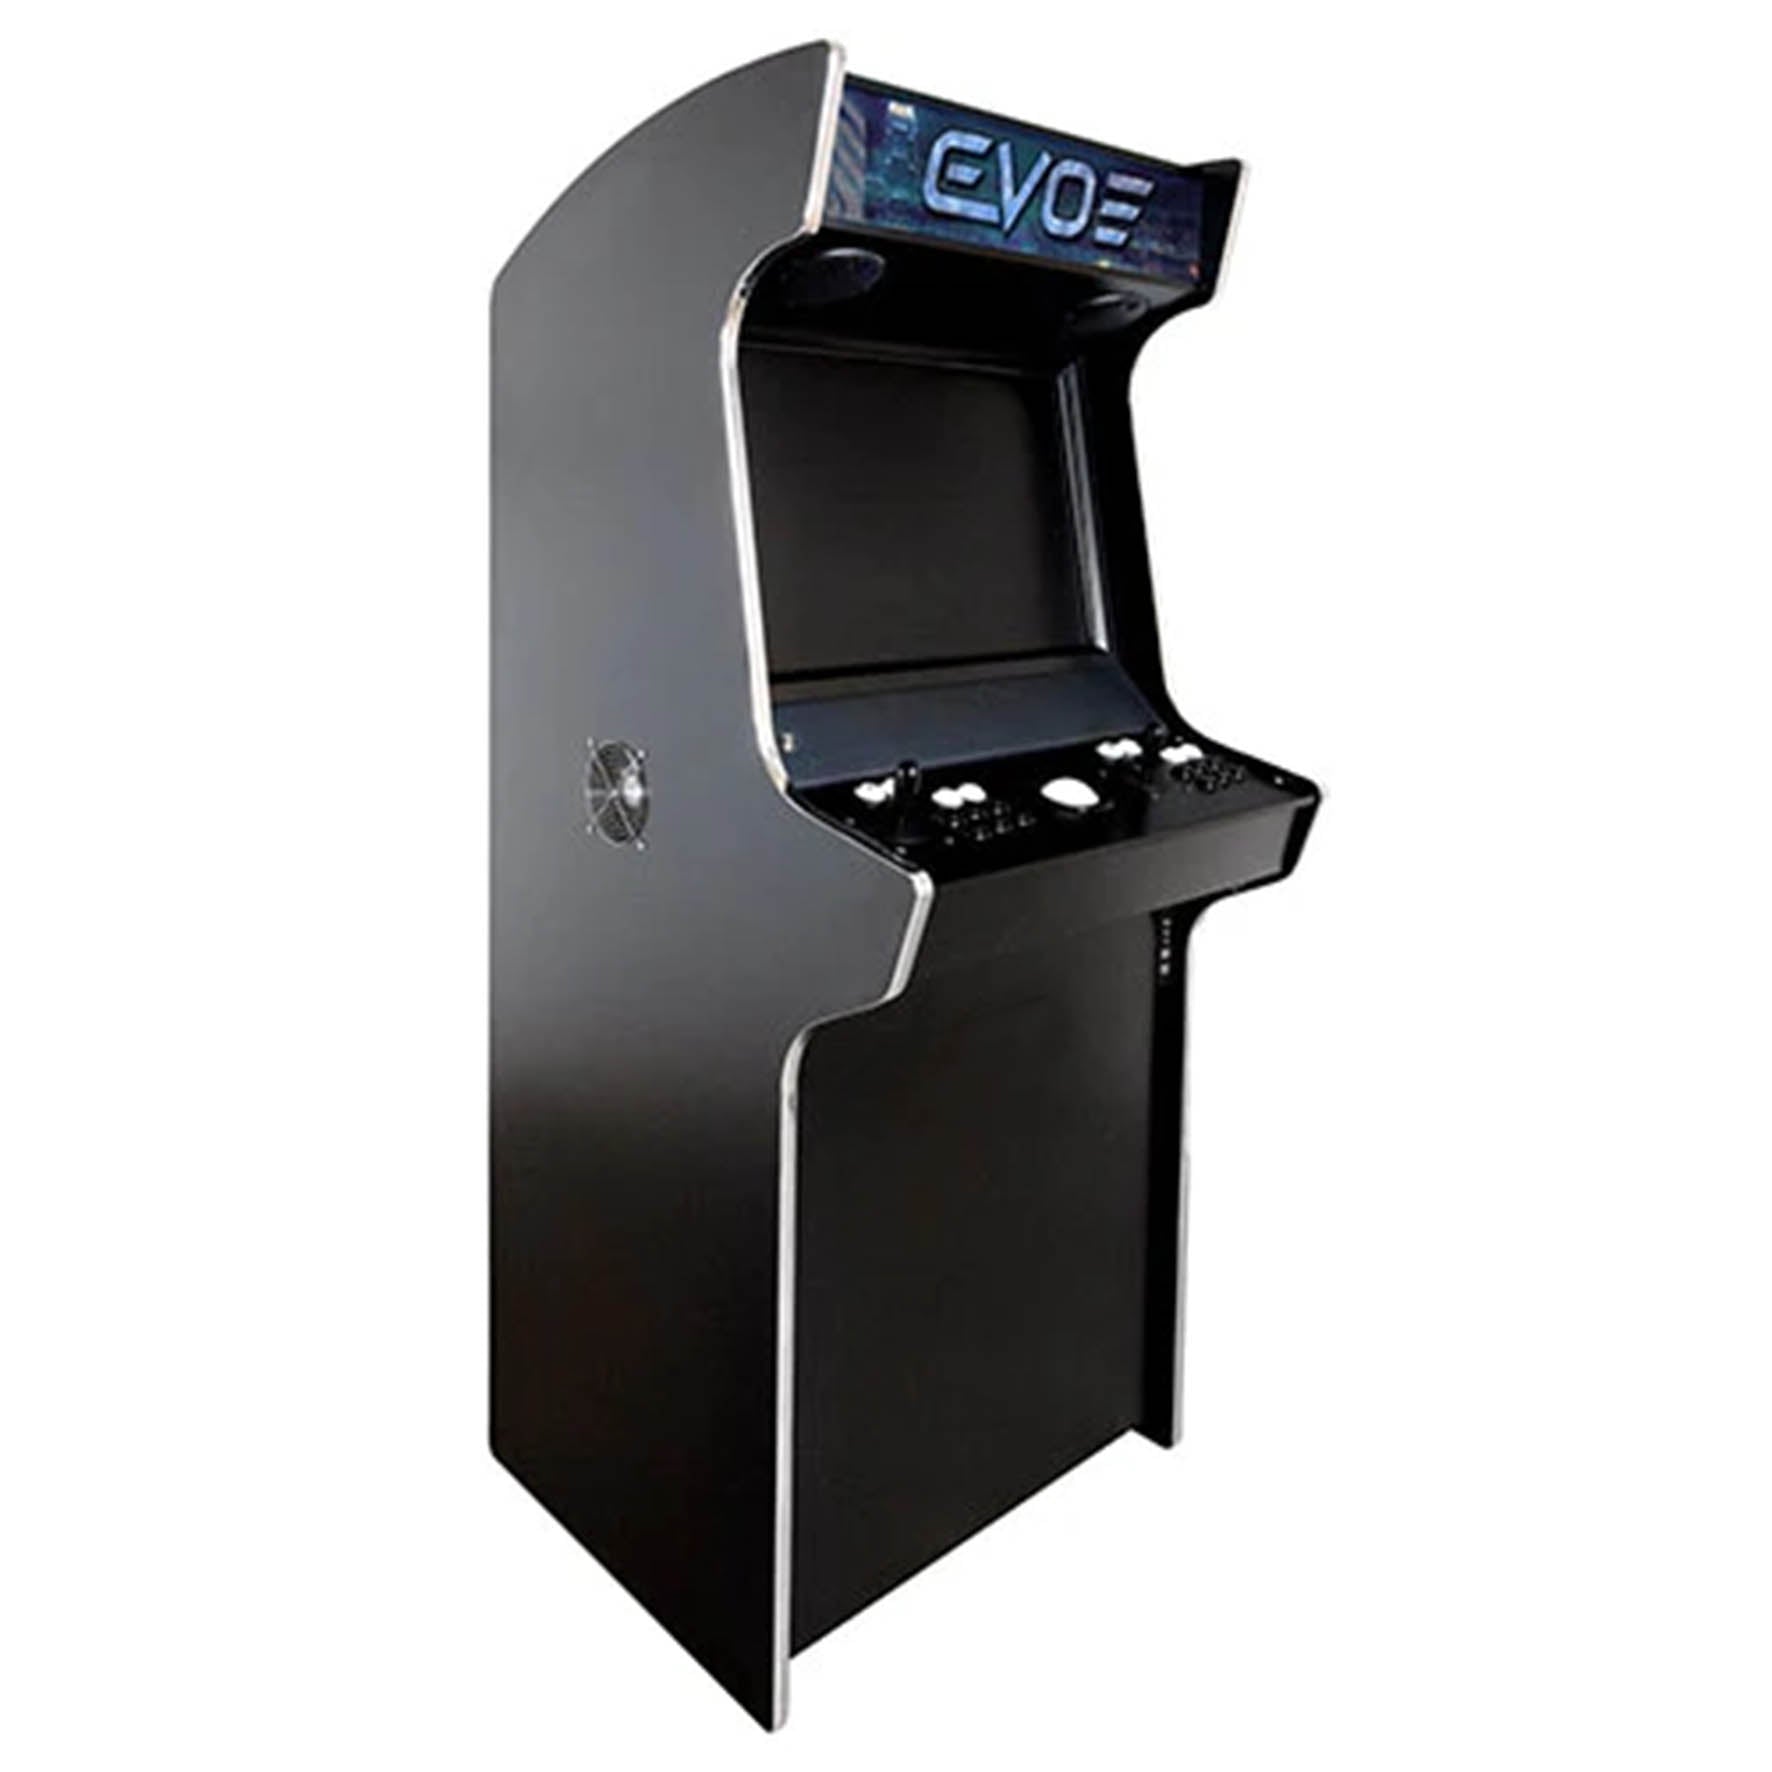 Evo 2 Player Upright Arcade MultiGame